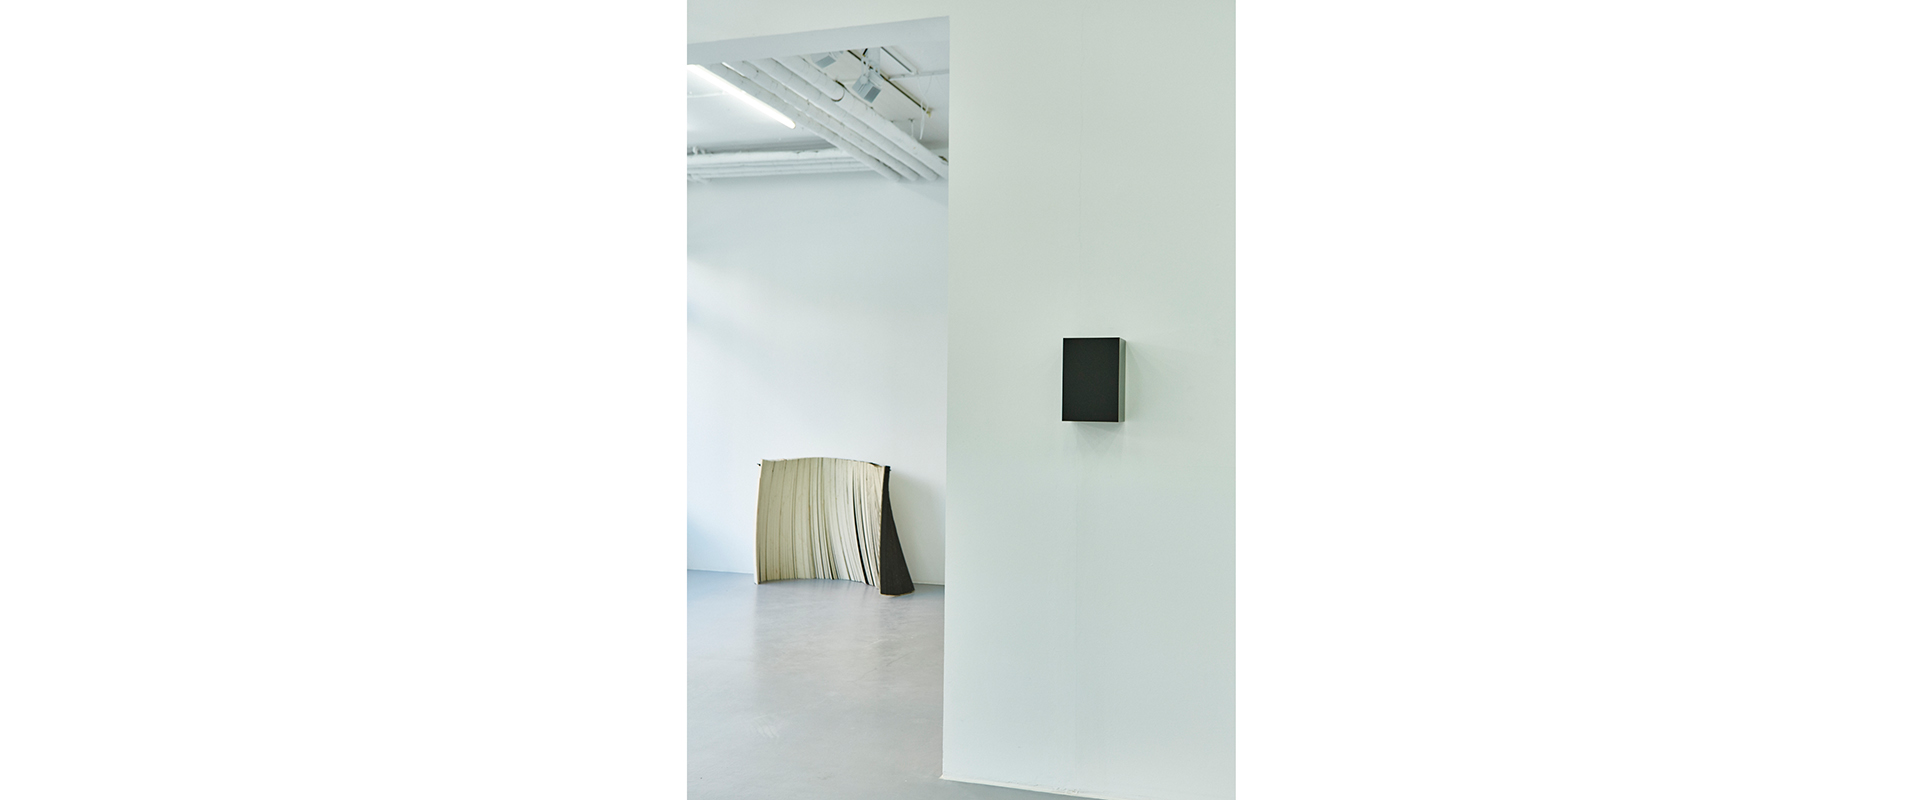 Bender Schwinn Projekt 2, Galerie Renate Bender 2017